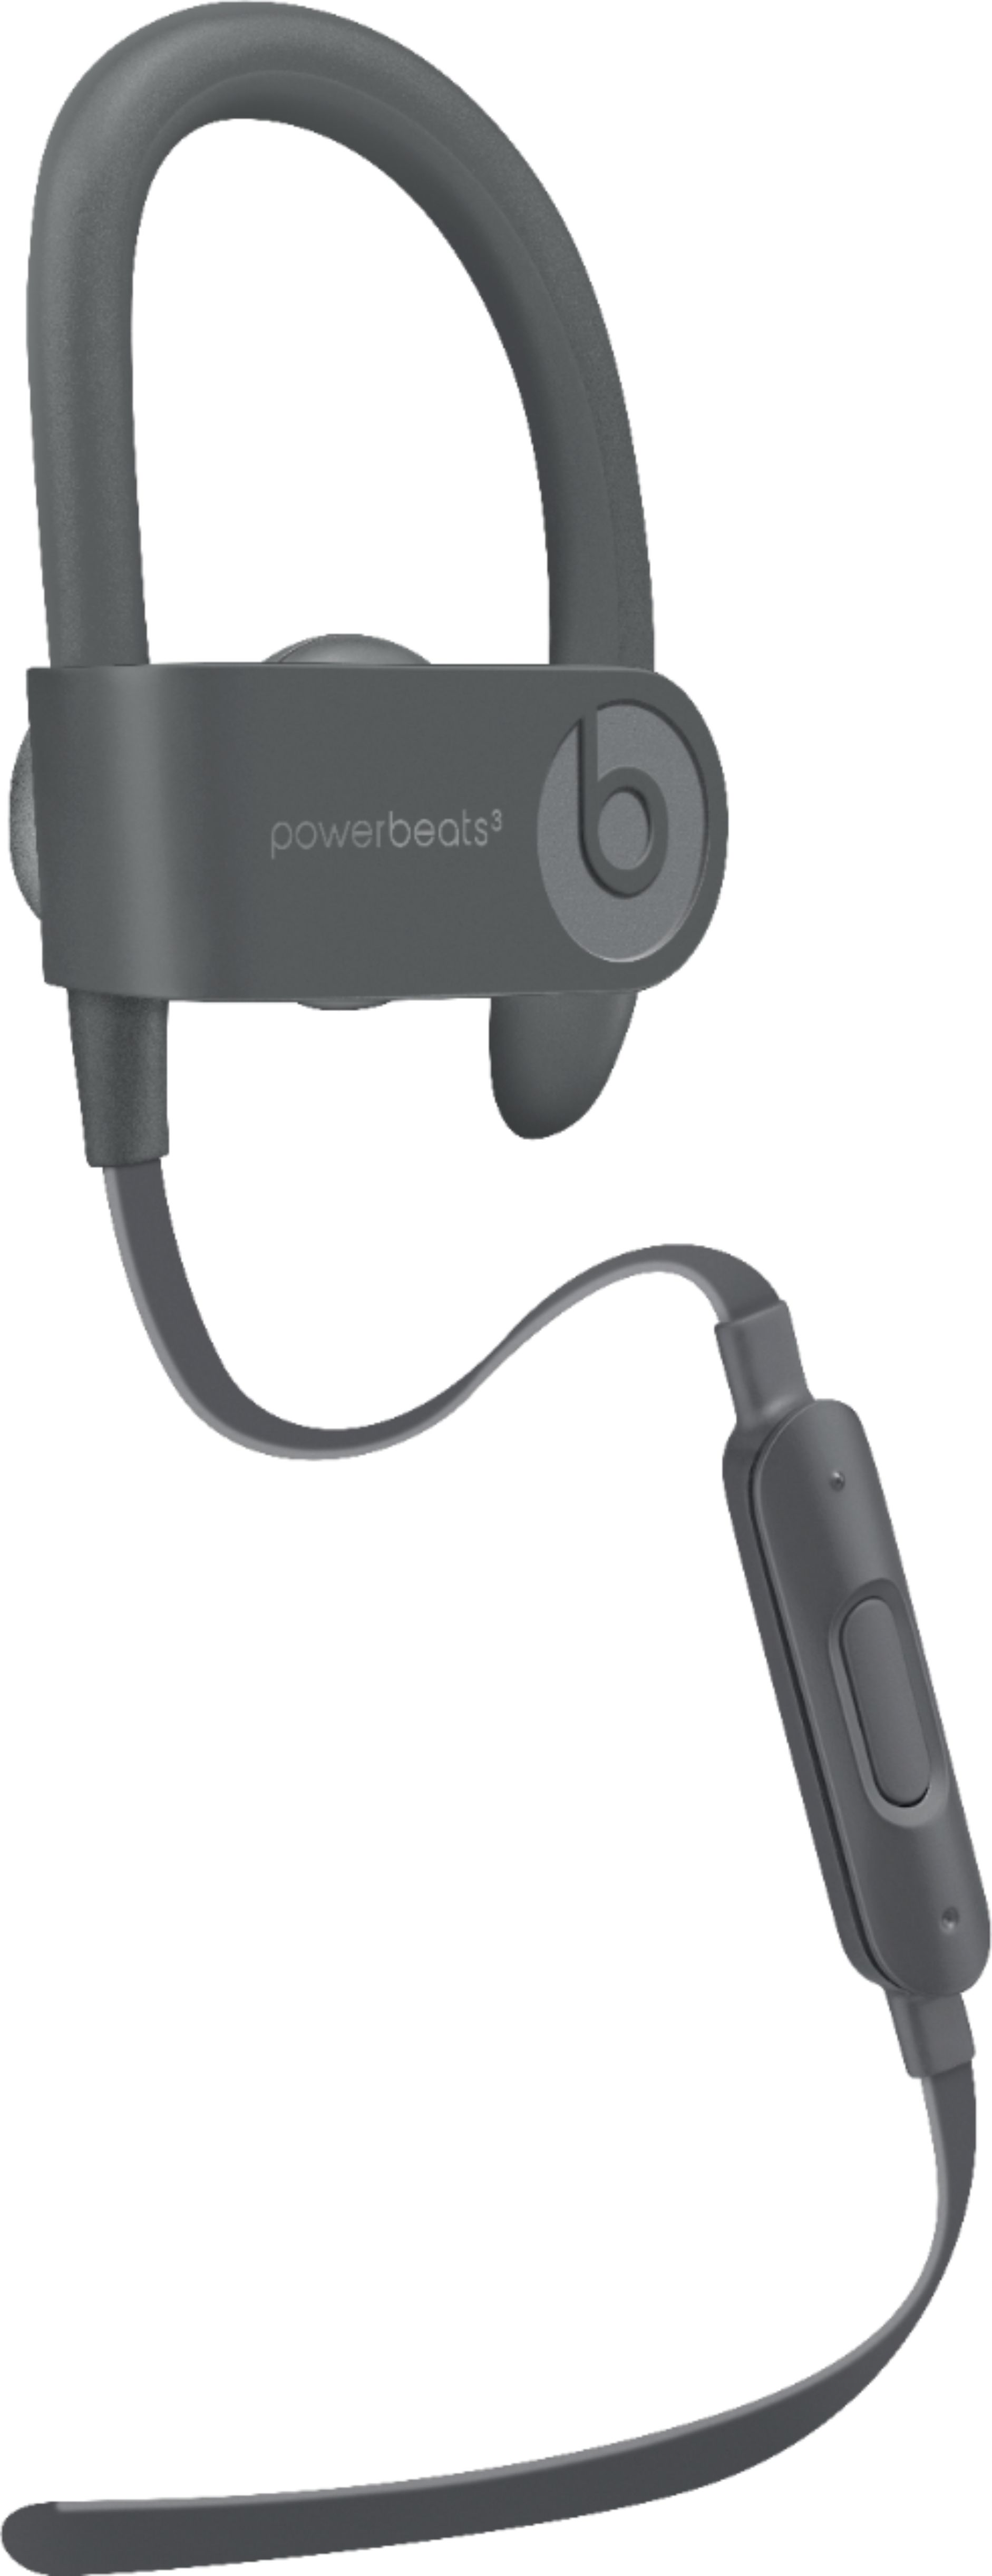 powerbeats 3 wireless asphalt gray